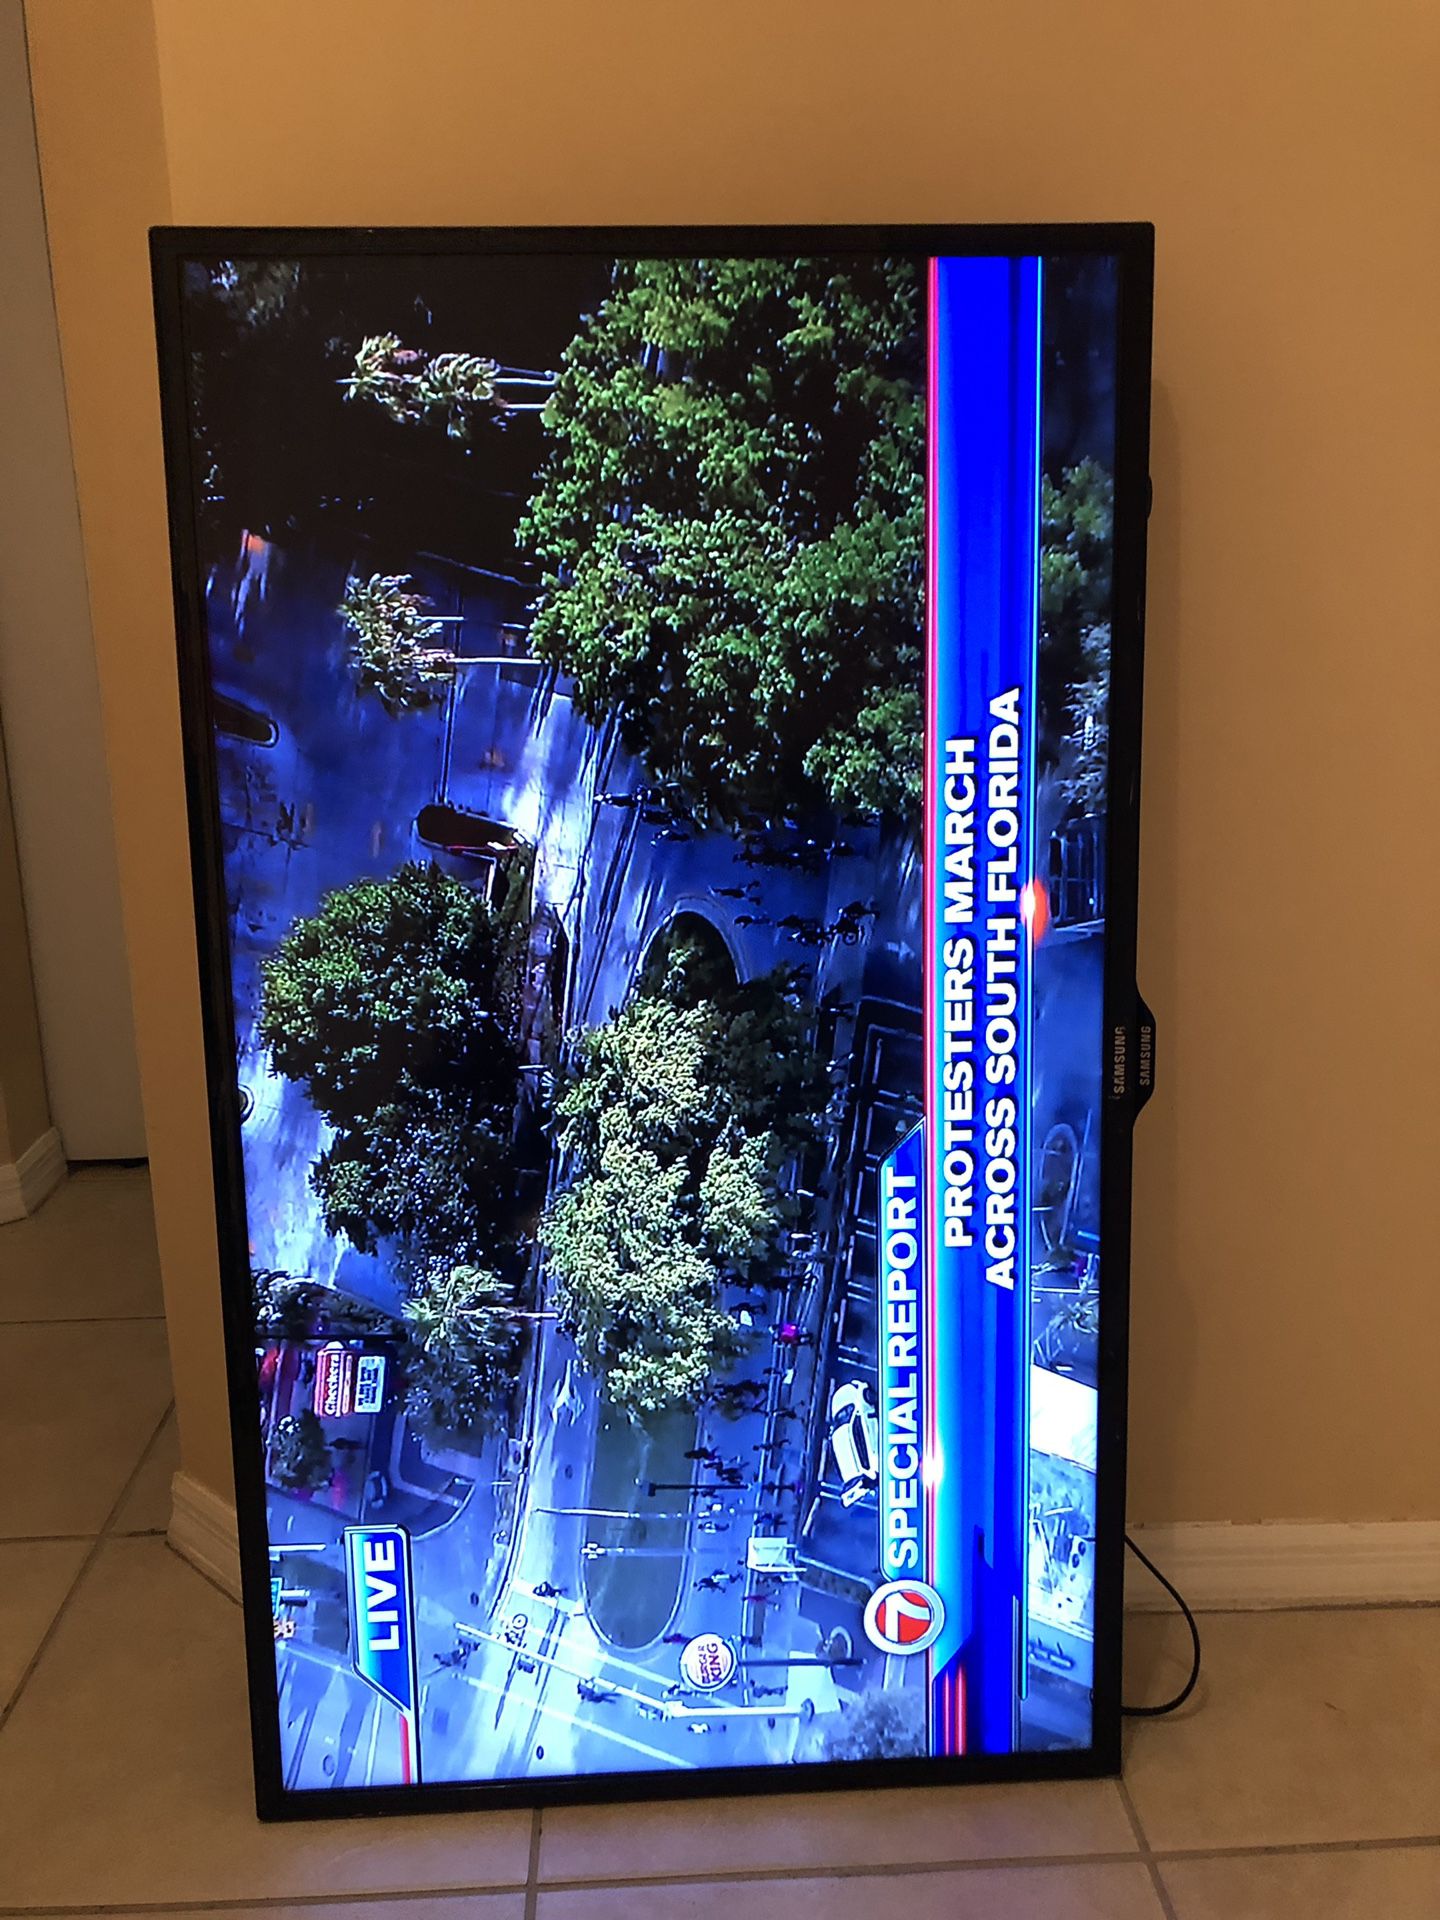 Samsung 46” LED FullHD TV